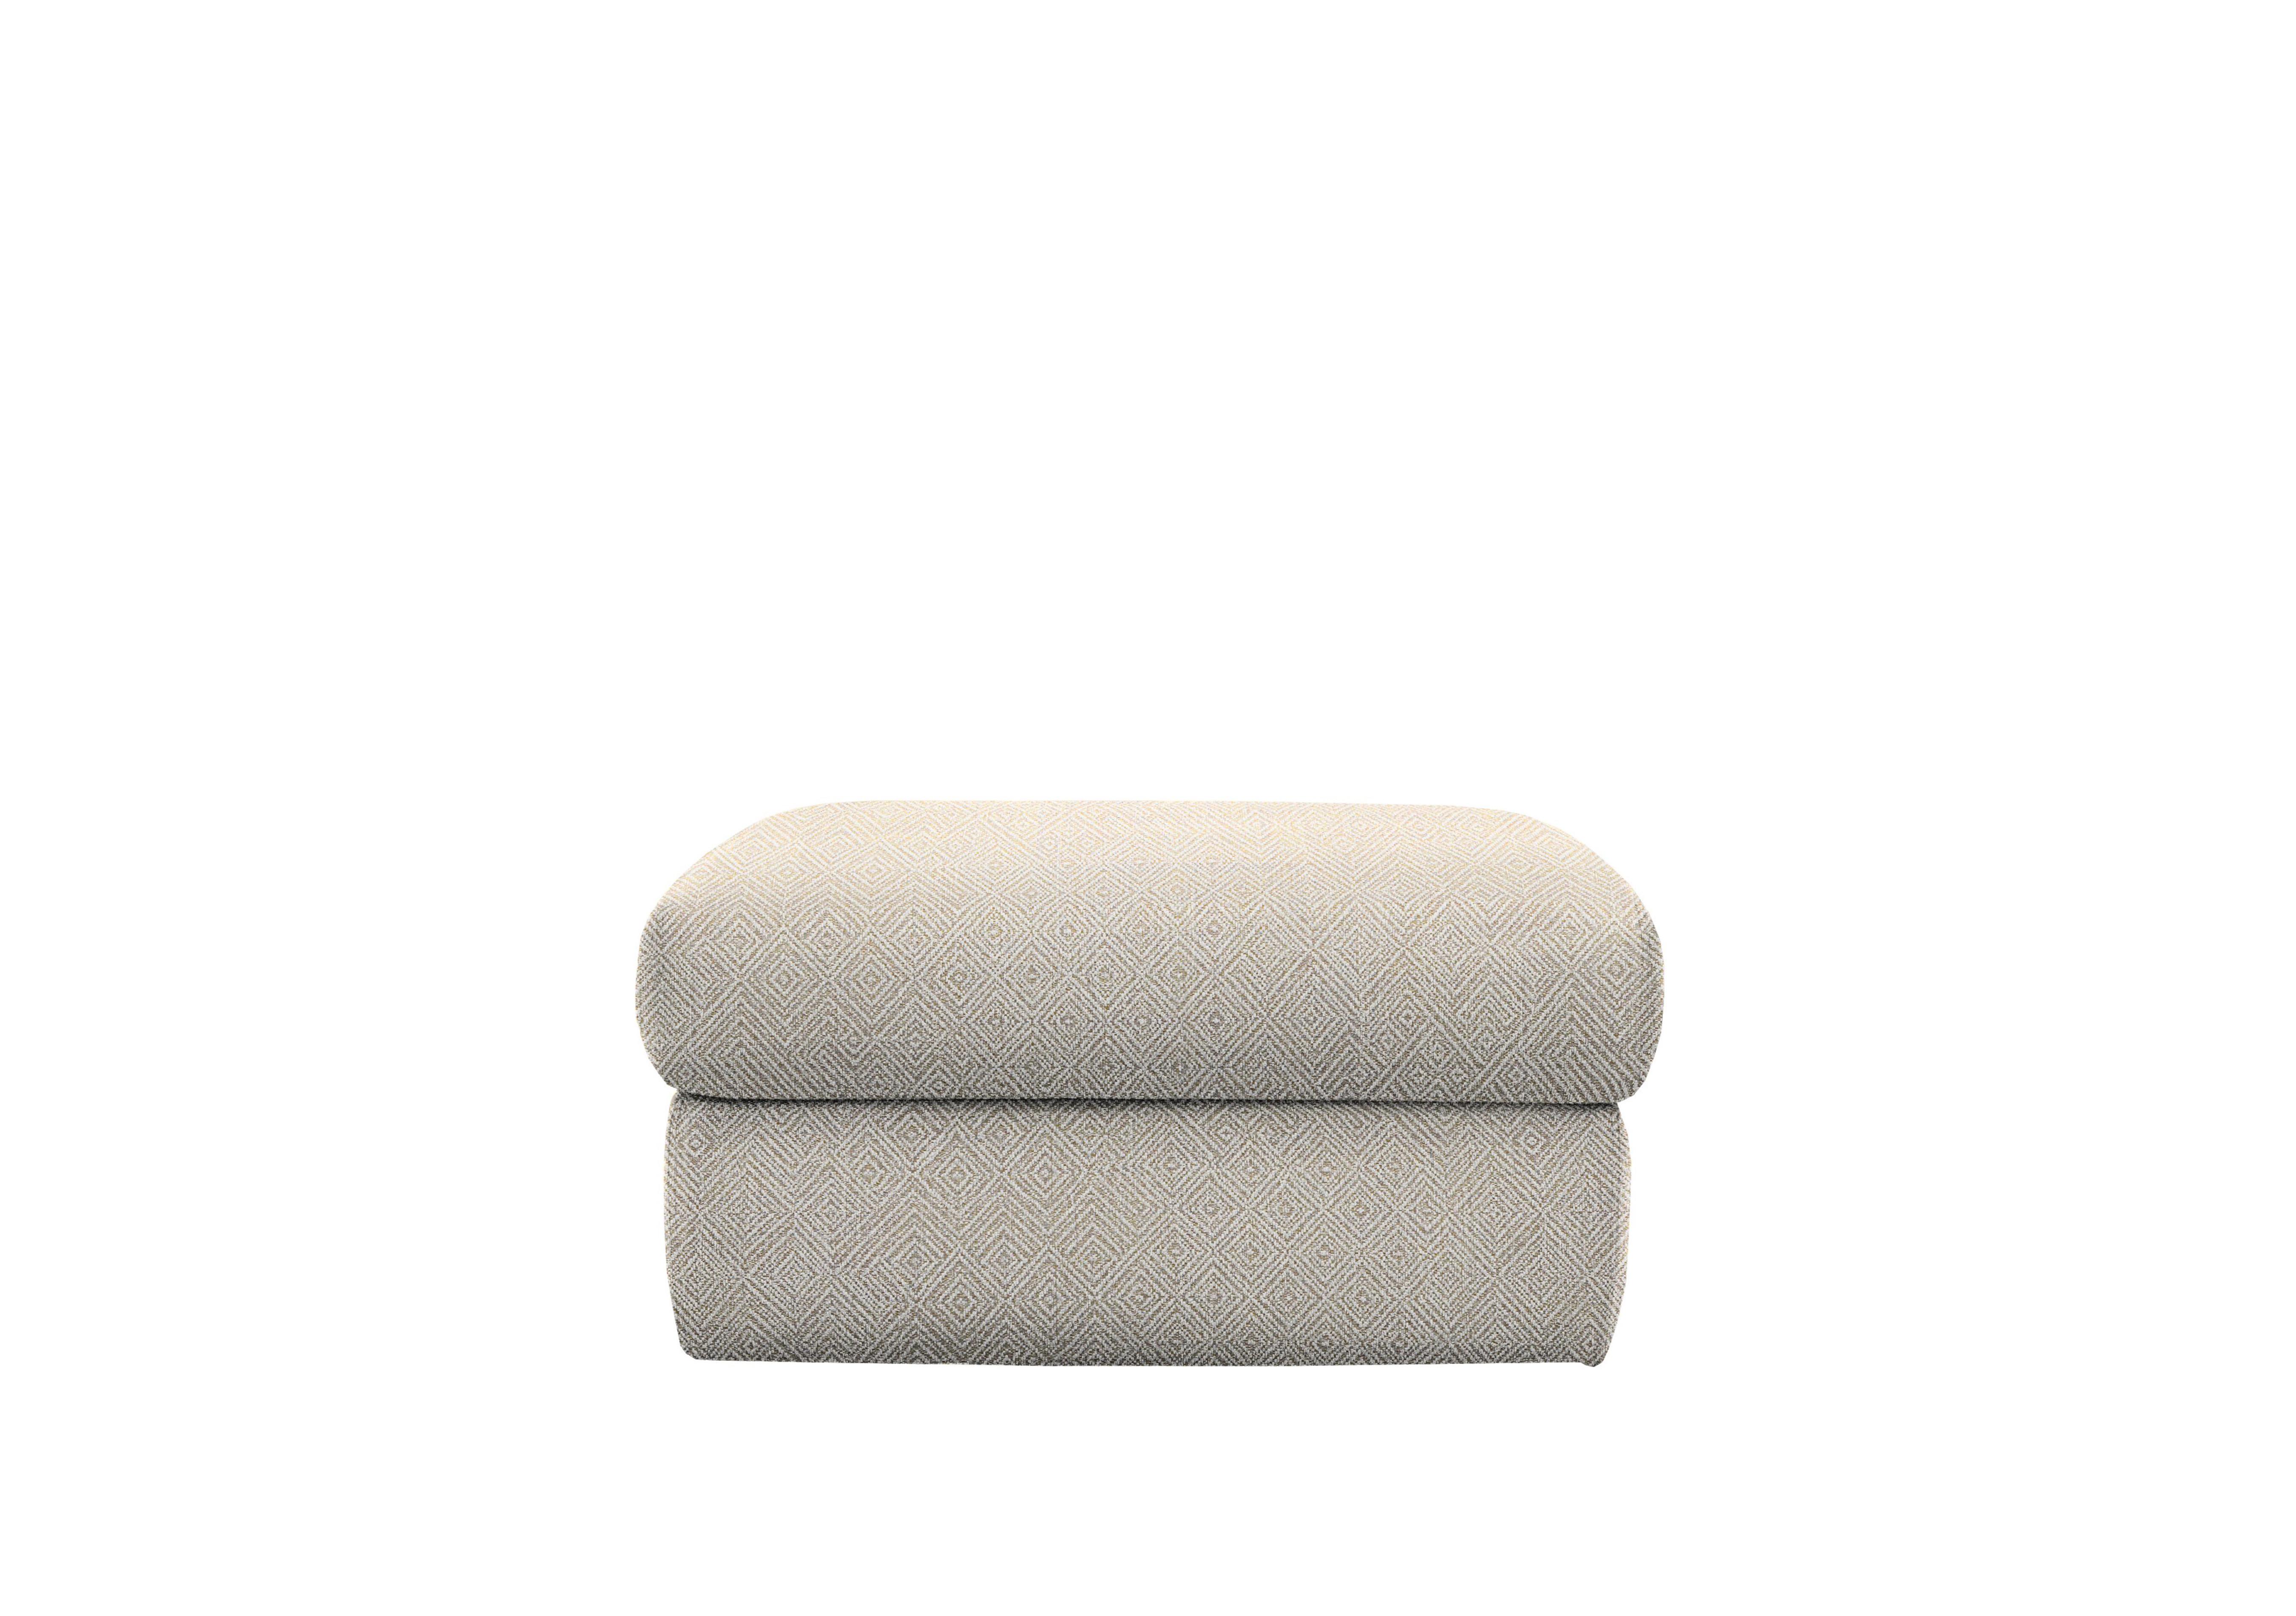 Kingsbury Fabric Storage Footstool in B011 Nebular Blush on Furniture Village